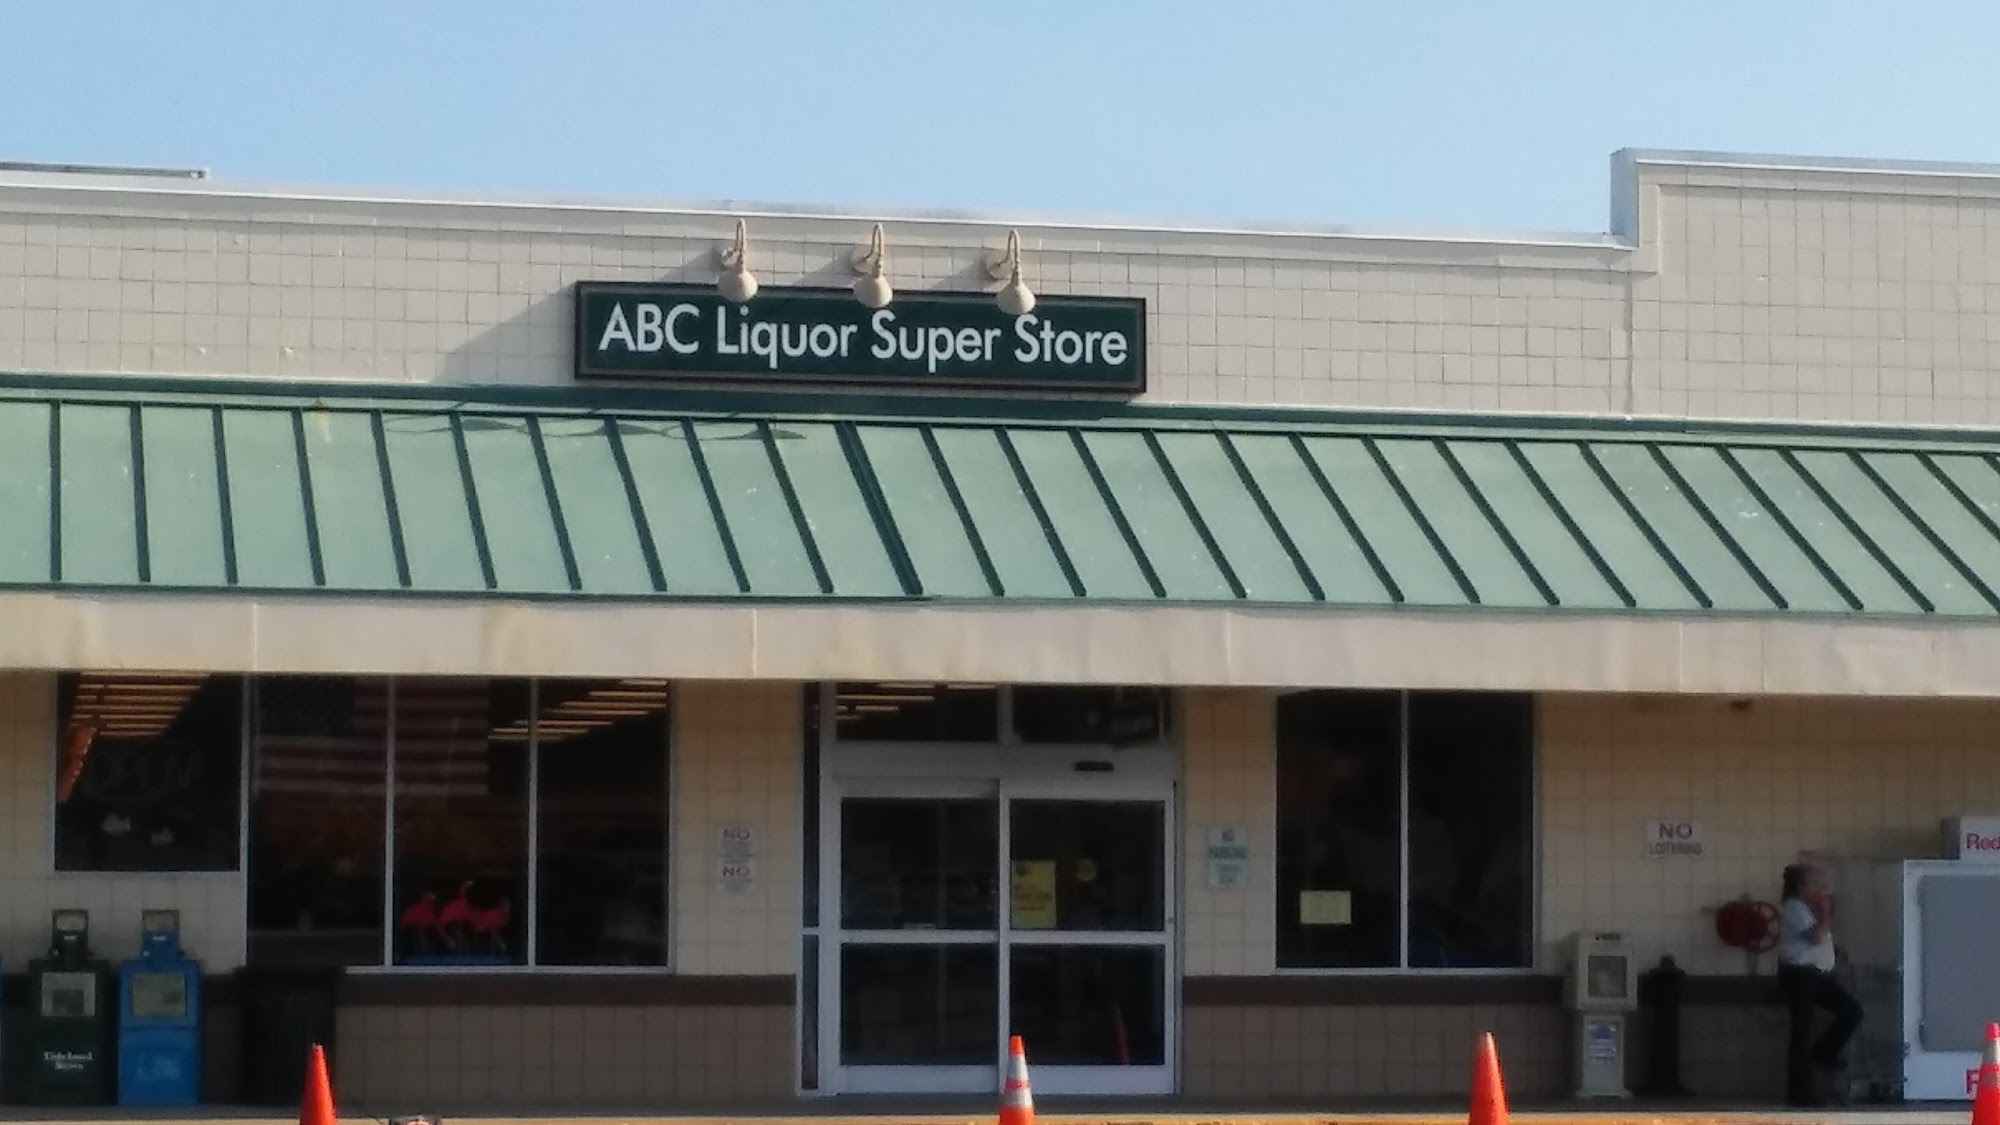 ABC Liquor Super Store